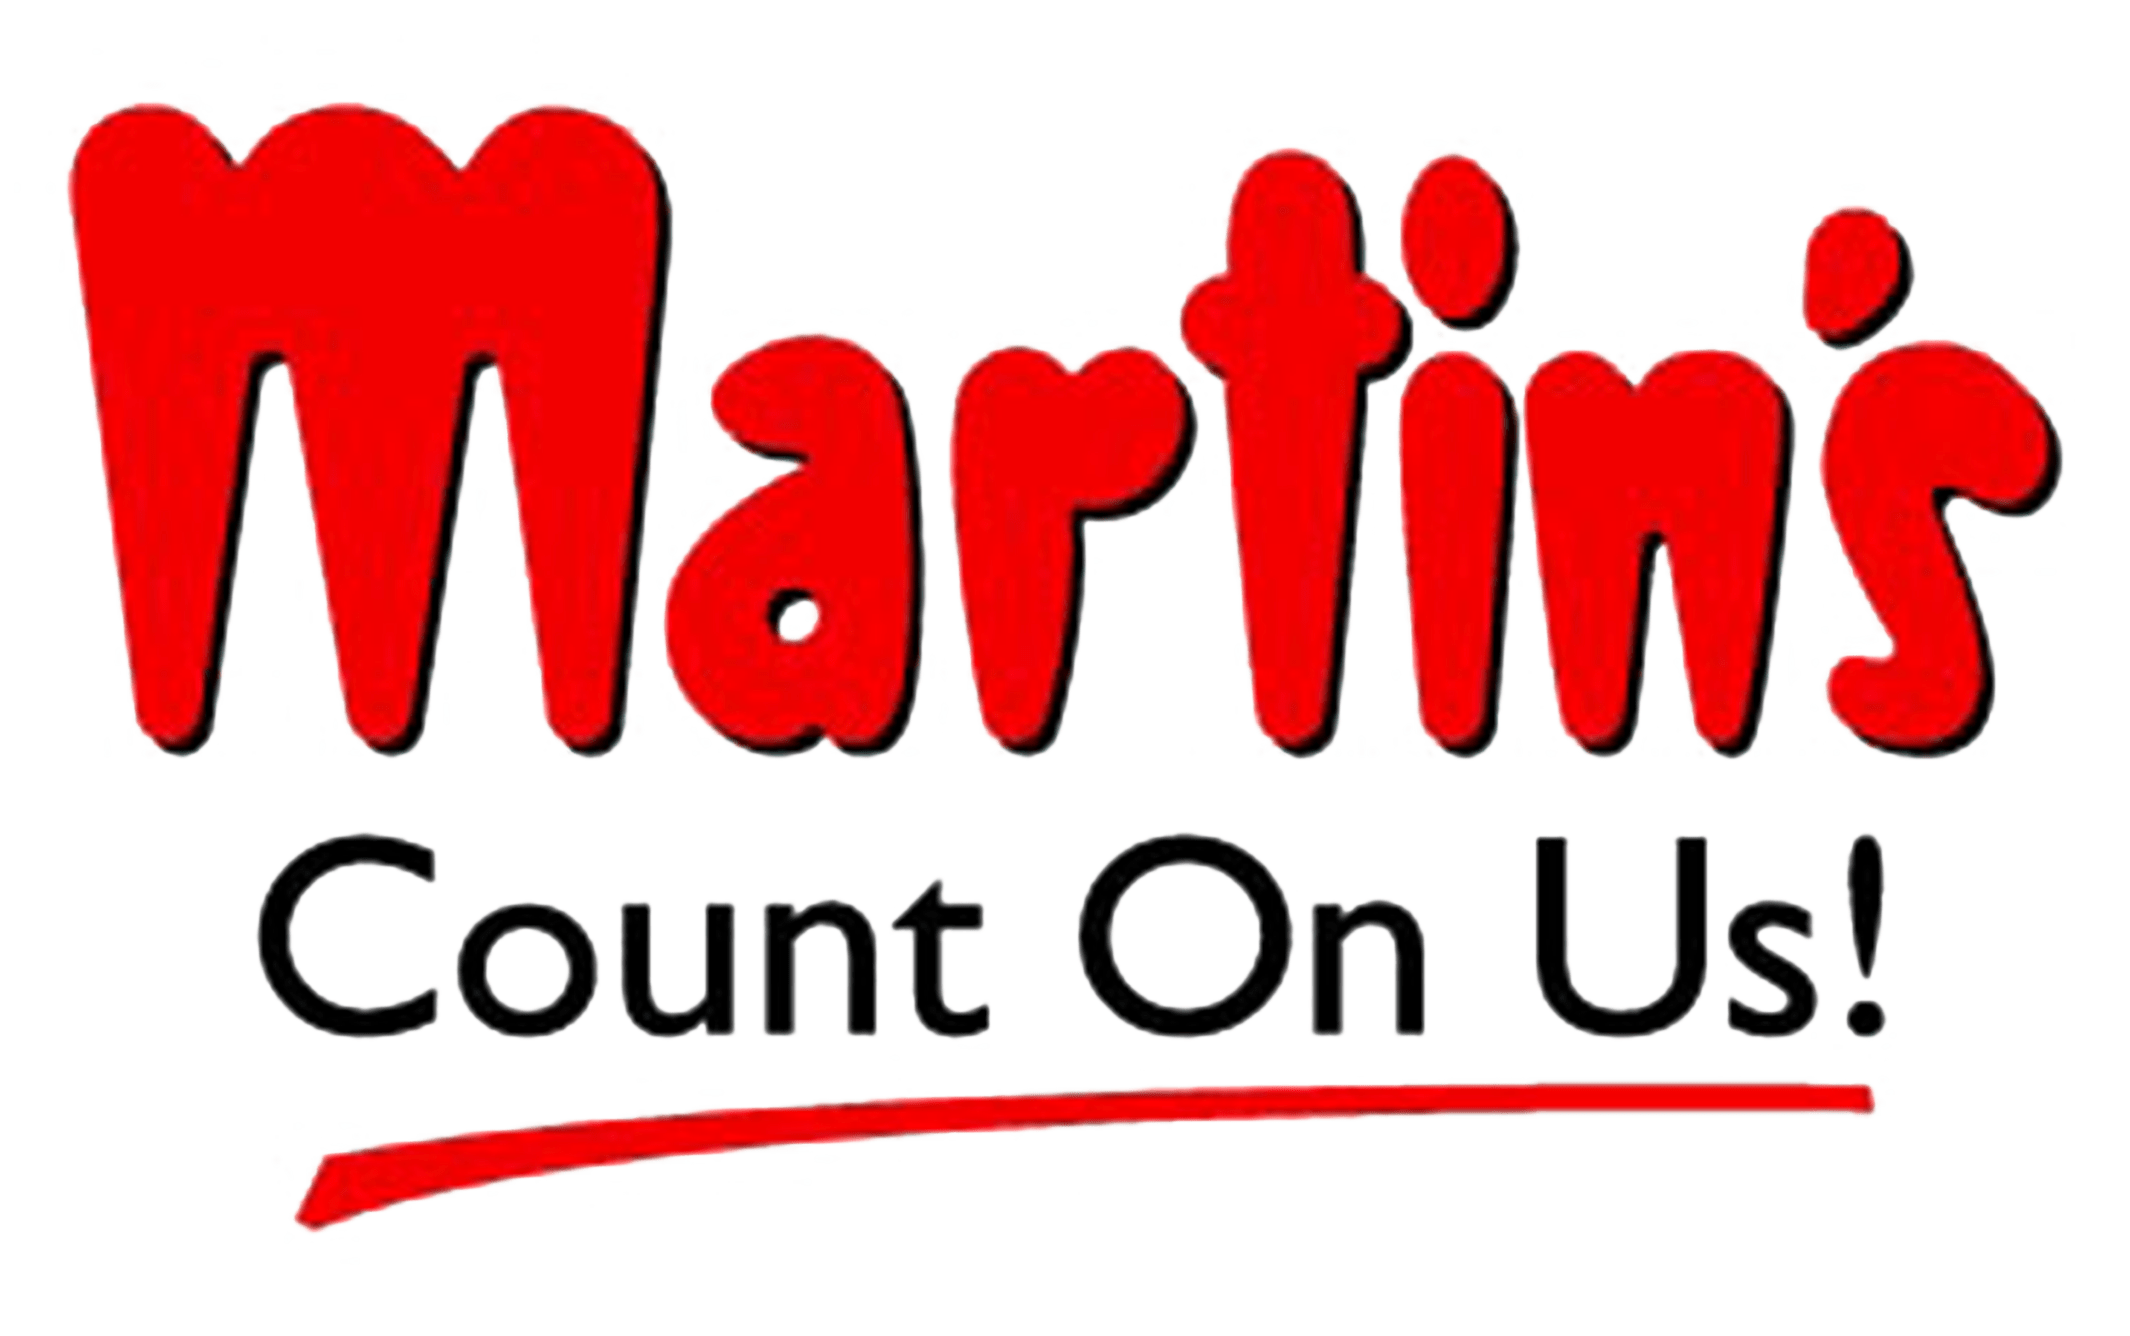 Martini's logo